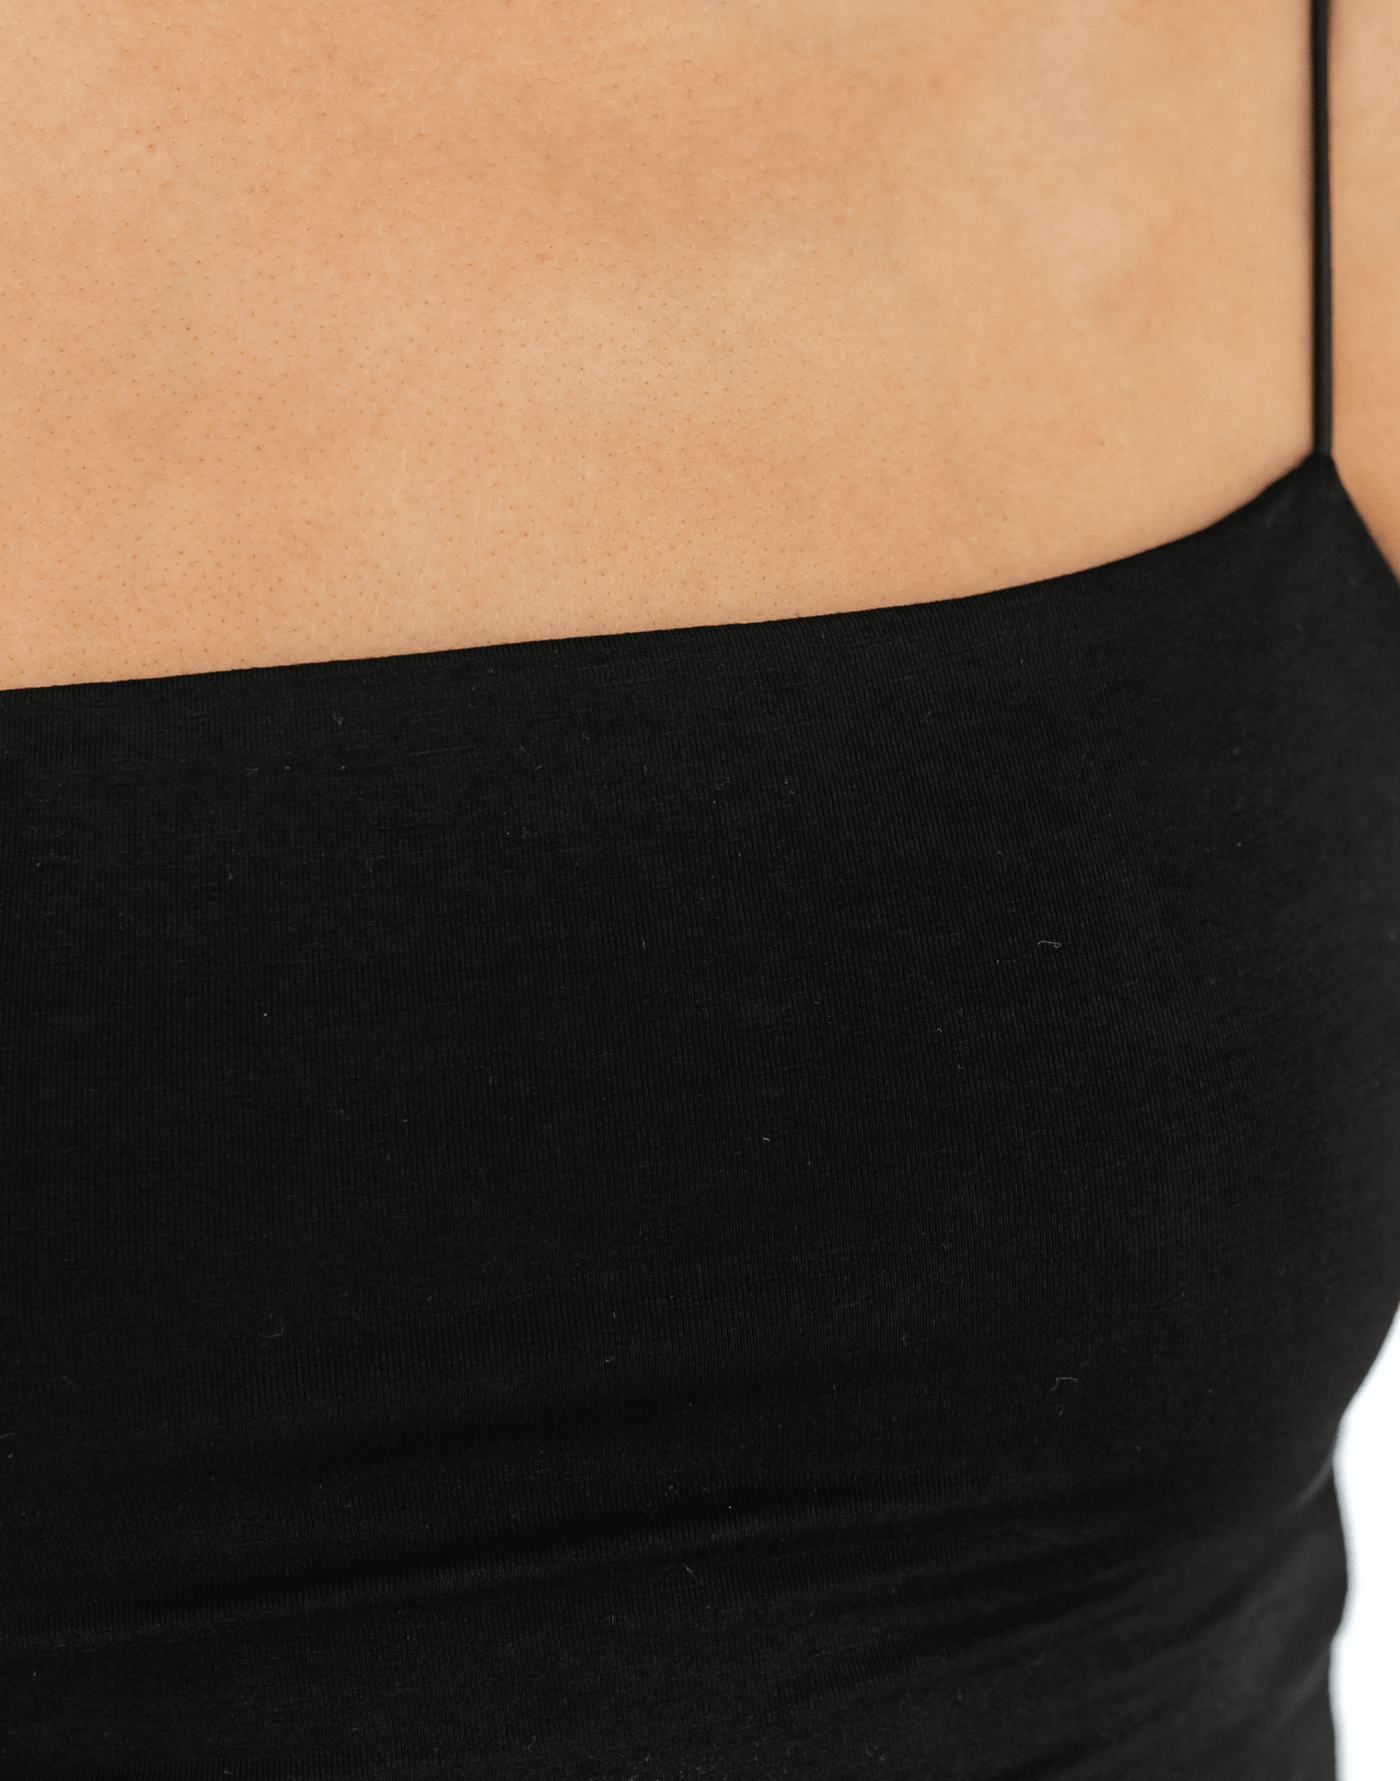 Tammy Crop Top (Black) - Basic Black Crop Top - Women's Top - Charcoal Clothing